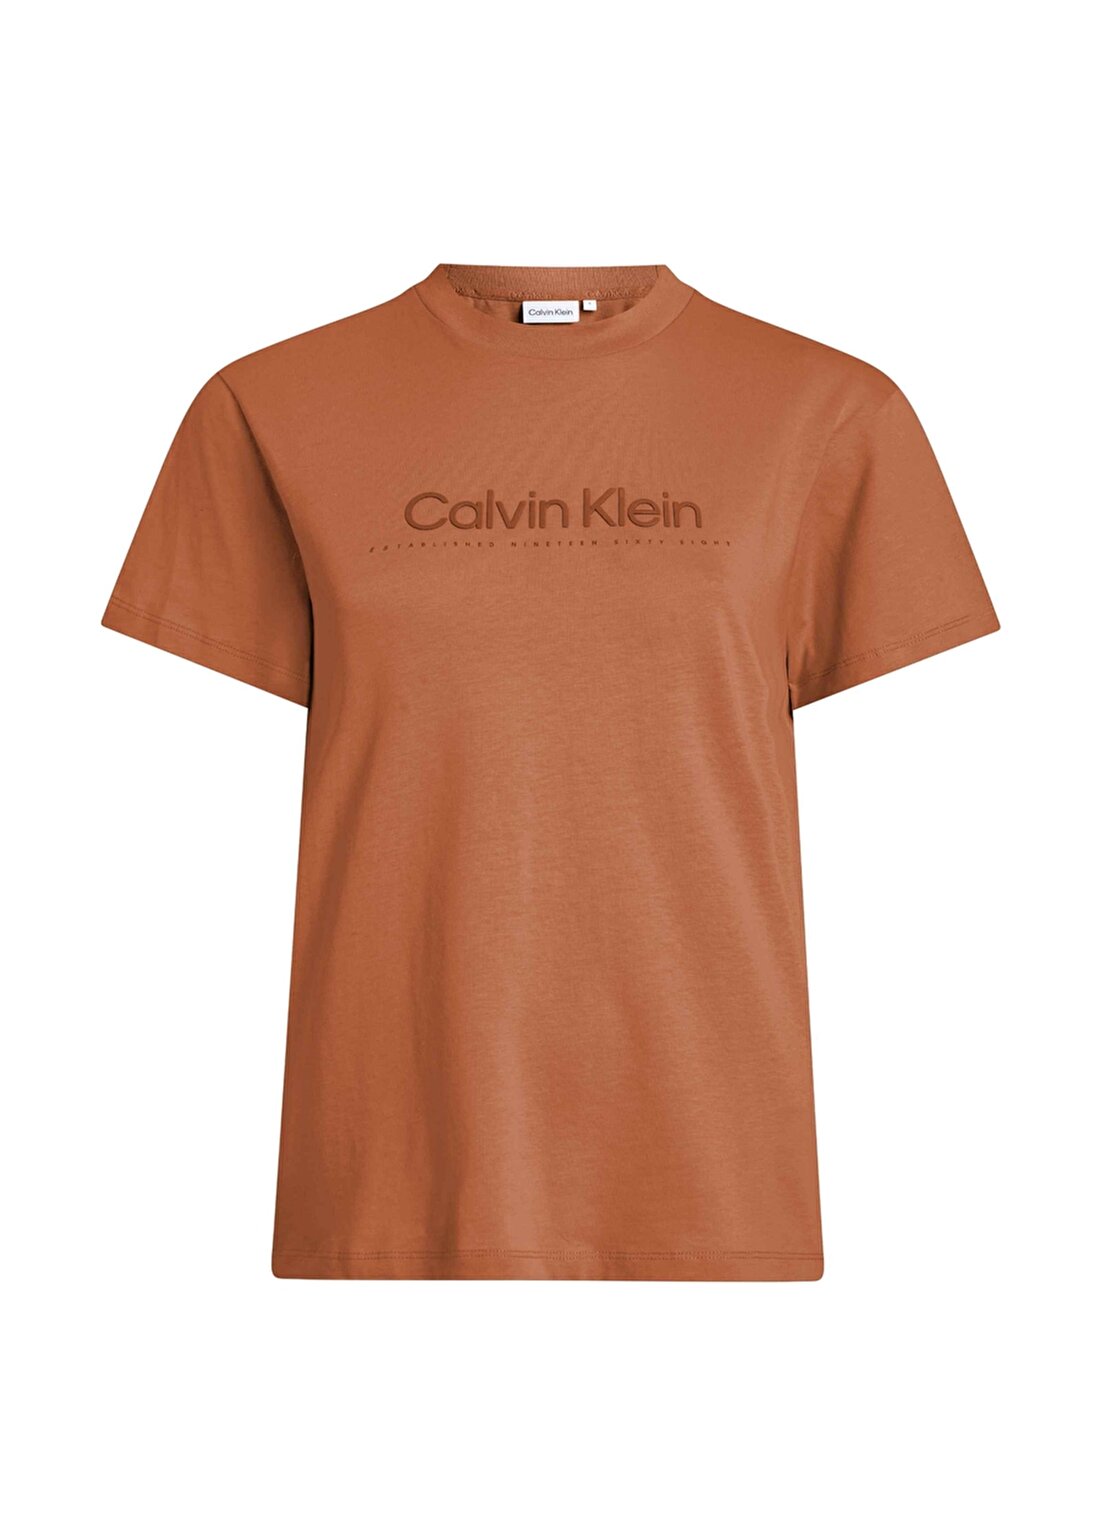 Calvin Klein Bisiklet Yaka Düz Kahve Kadın T-Shirt SATIN PRINT GRAPHIC T SHIRT